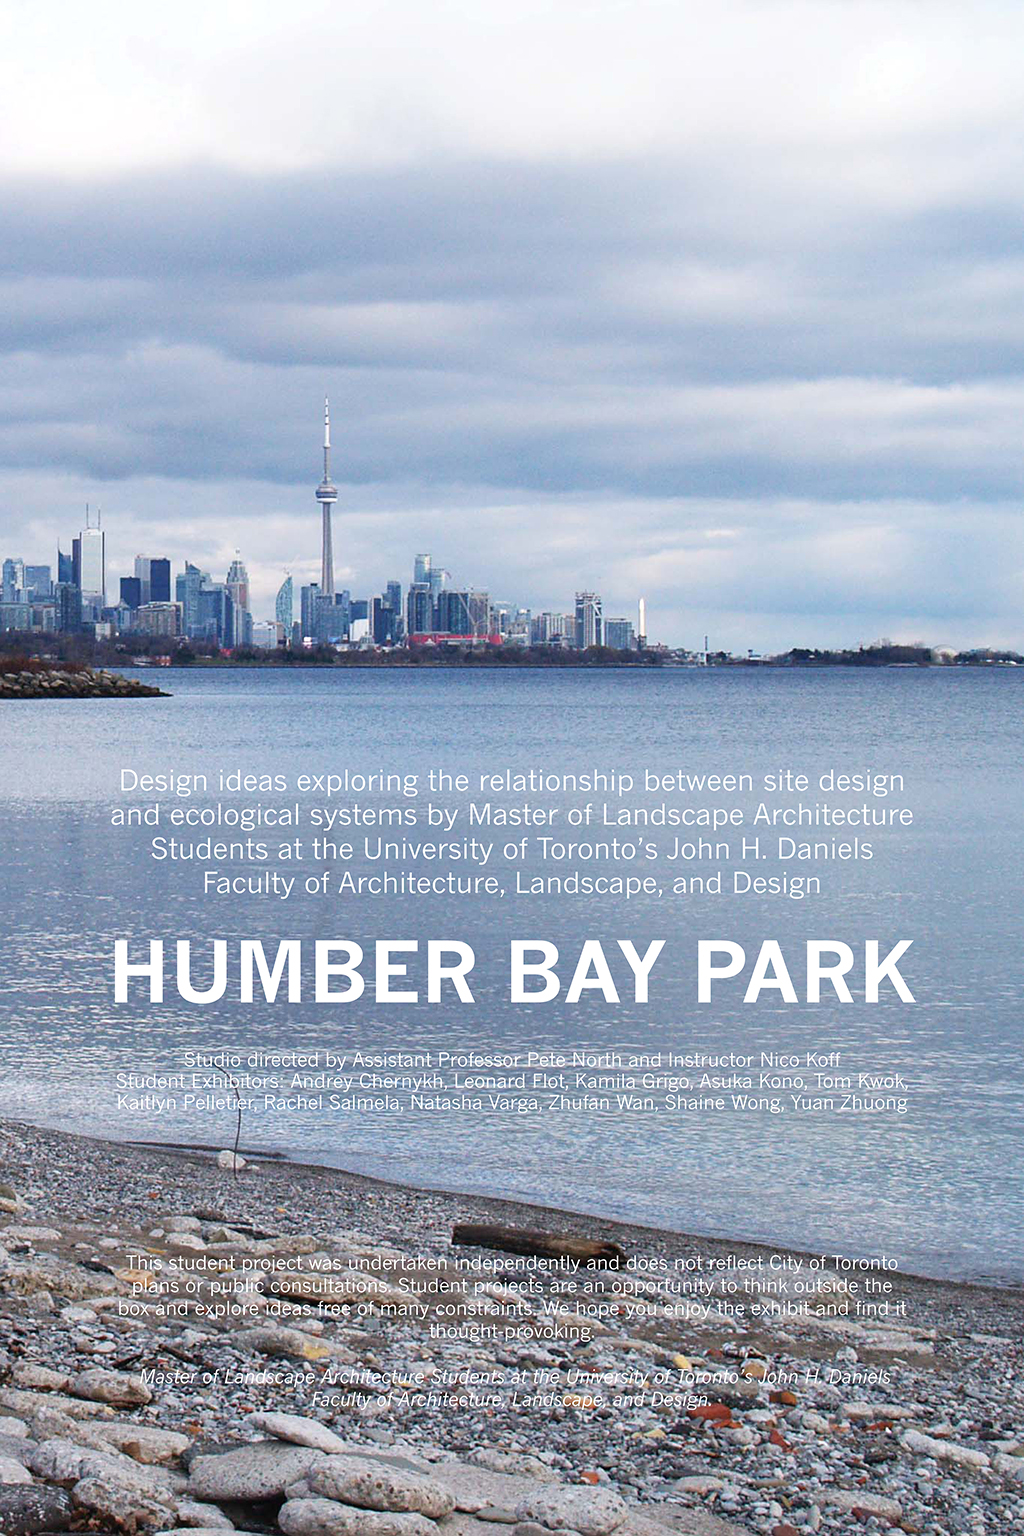 Humber Bay Park